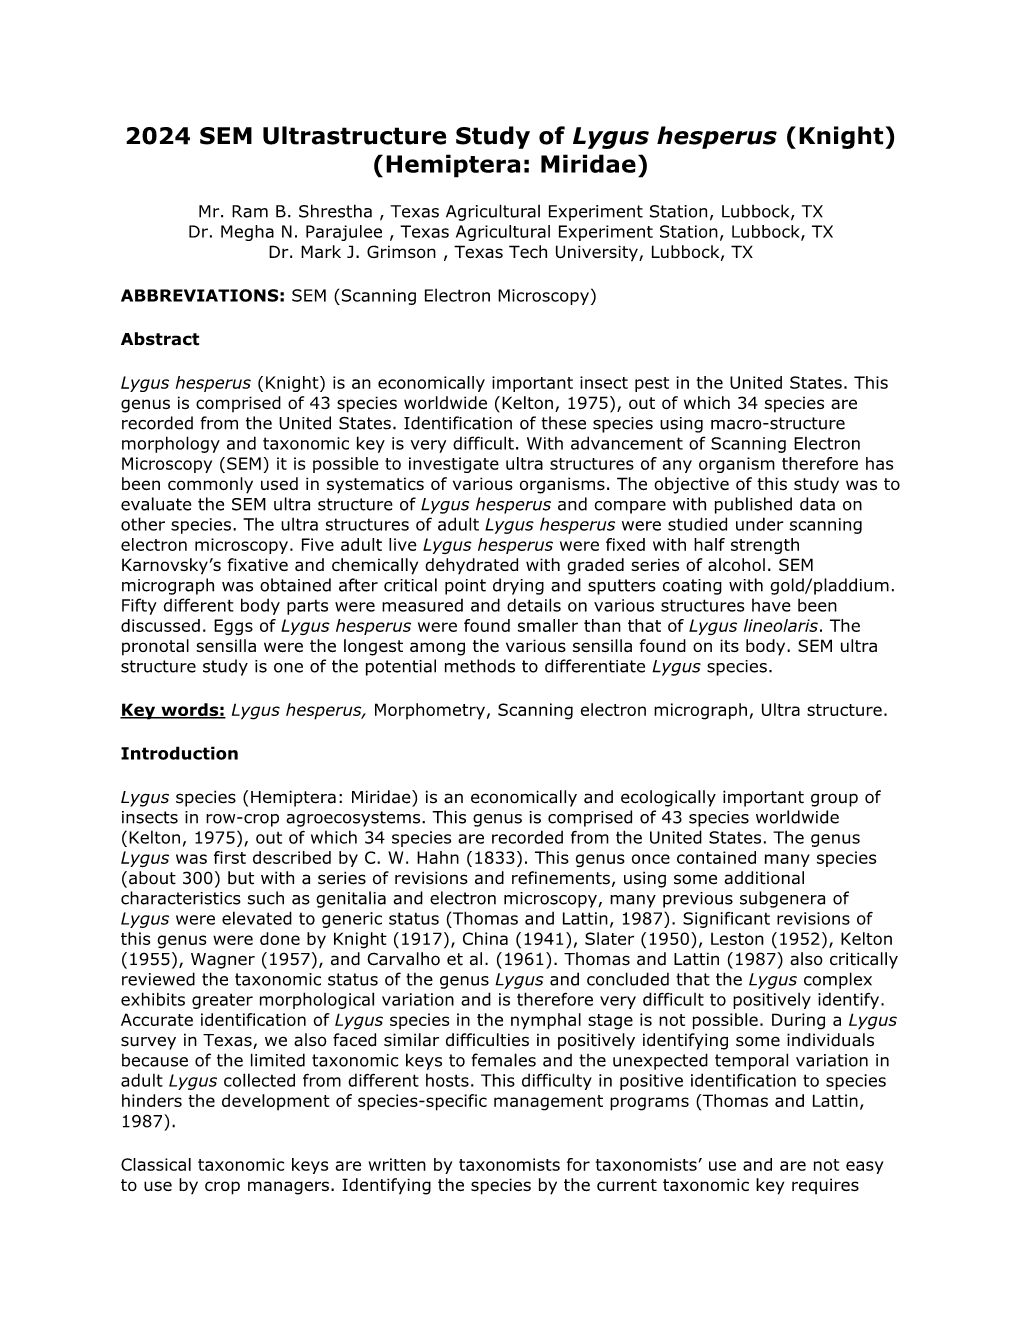 2024 SEM Ultrastructure Study of Lygus Hesperus (Knight) (Hemiptera: Miridae)